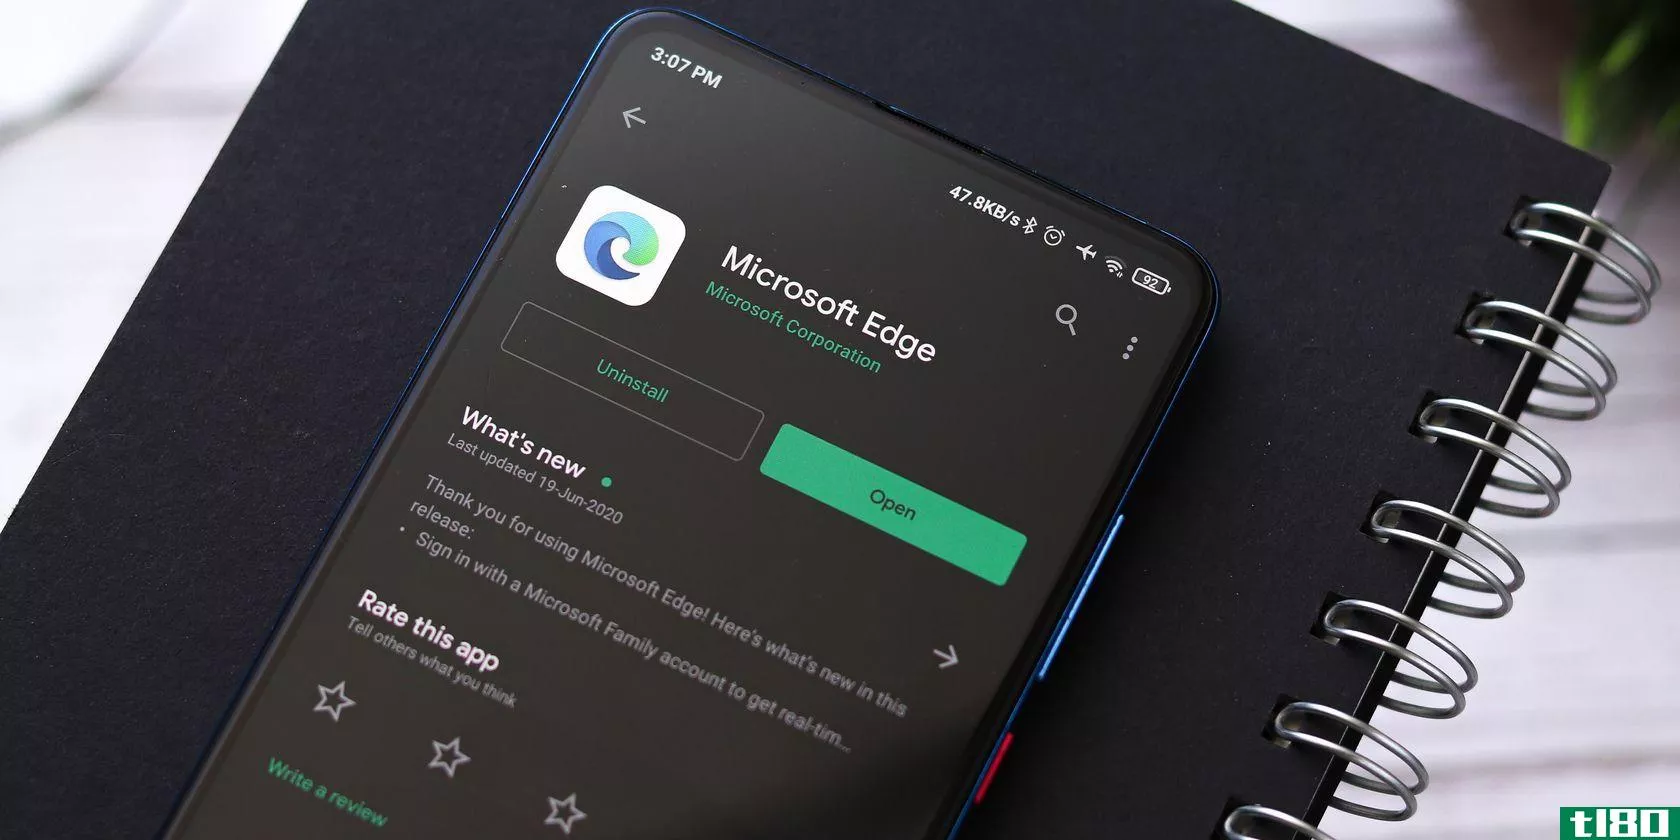 Microsoft Edge on Mobile